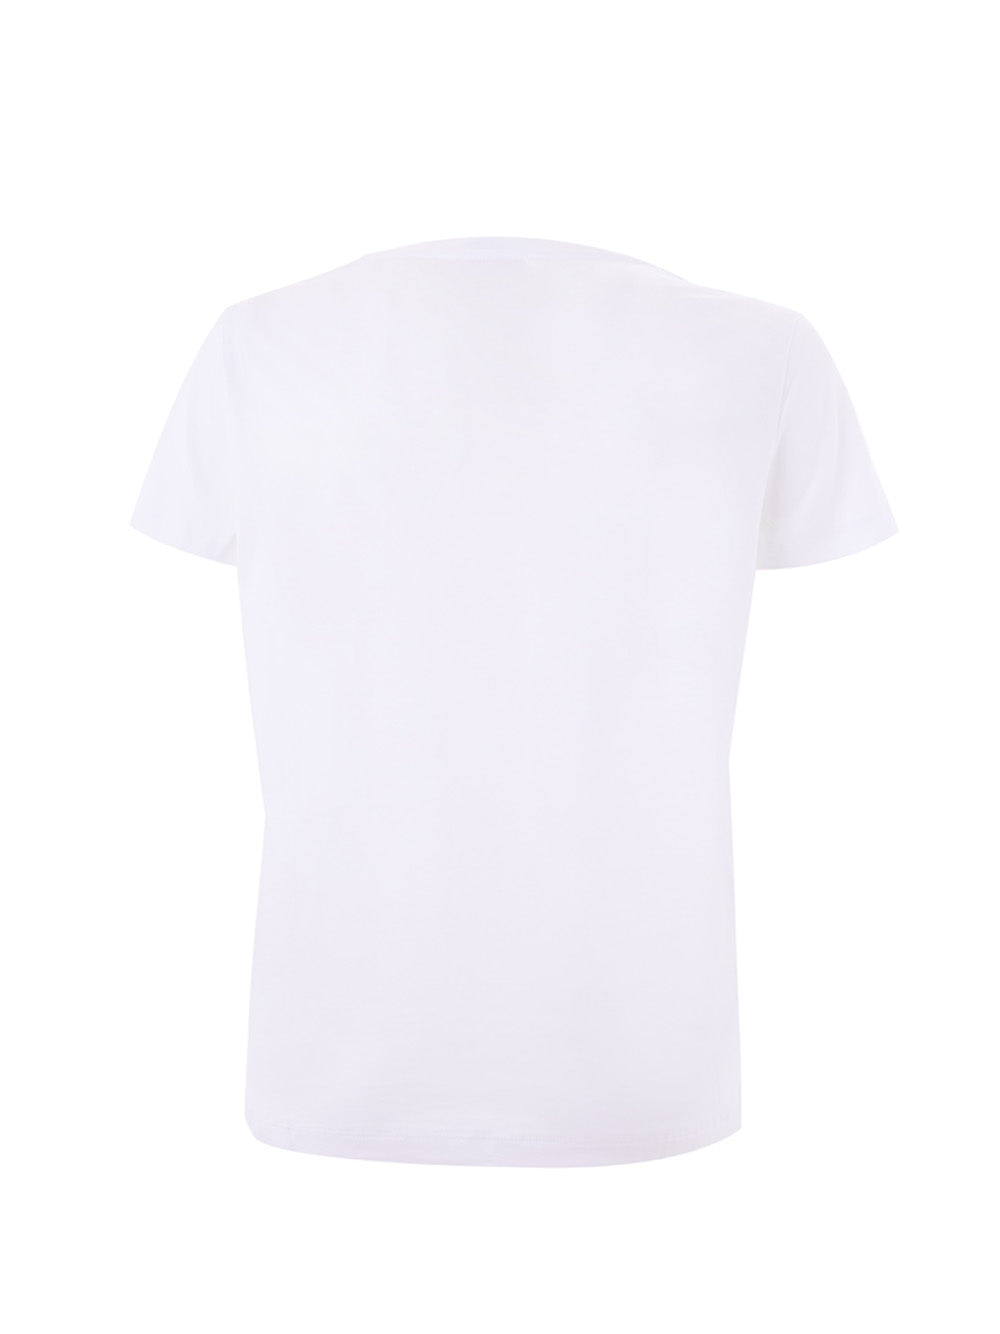 Fashionsarah.com Fashionsarah.com Kenzo White Cotton T-Shirt with Wave Blue Print